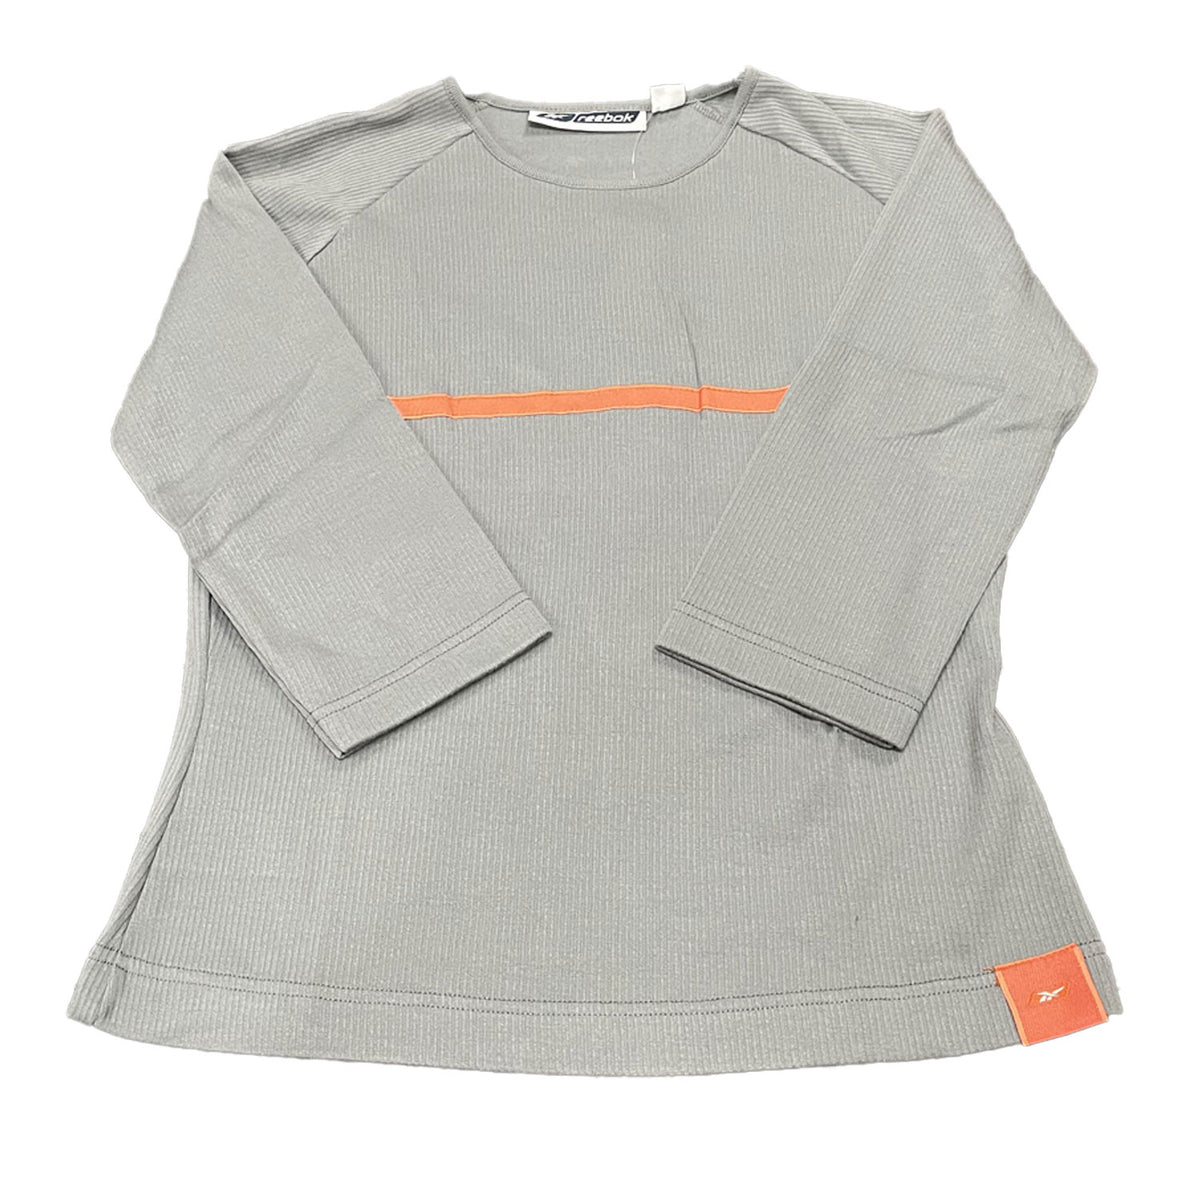 Reebok Womens Lined Freestyle Top - Grey - UK Size 12